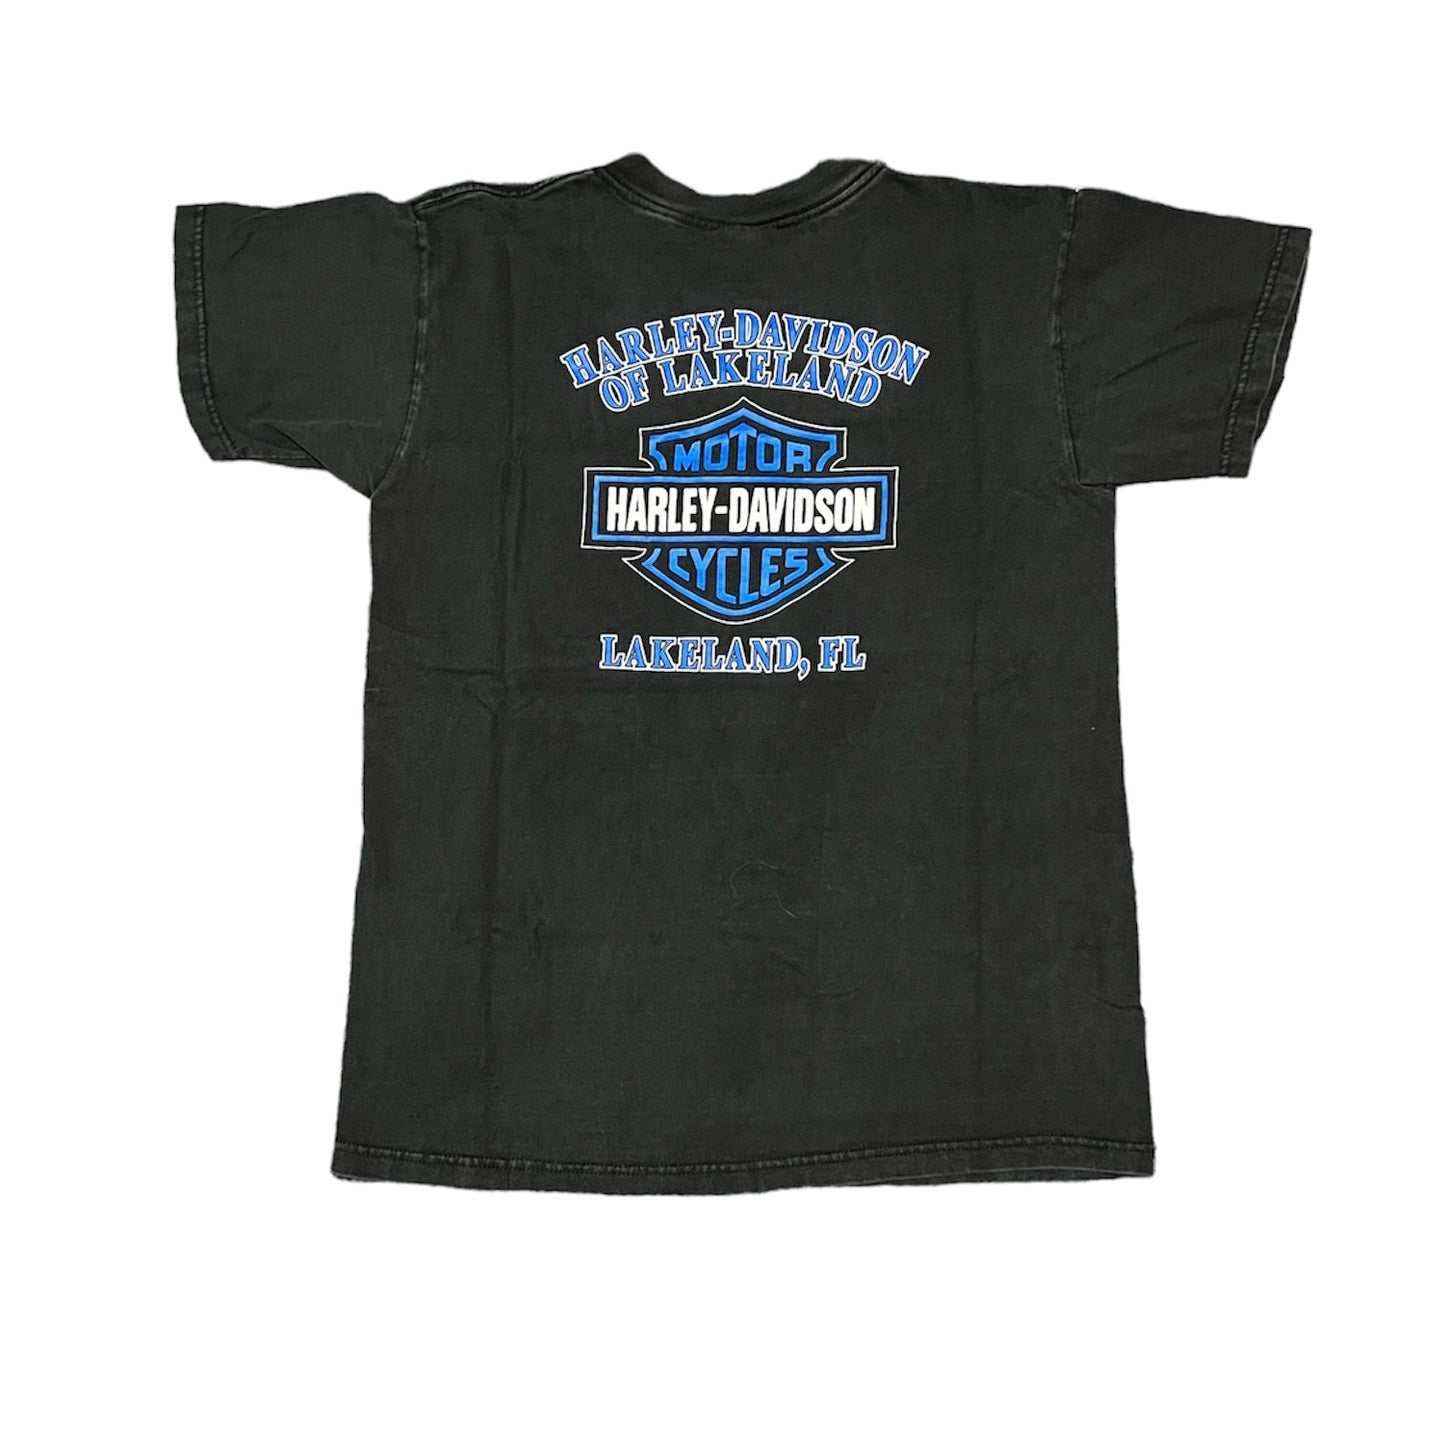 Harley Davidson Of Lakeland T-Shirt Size Medium